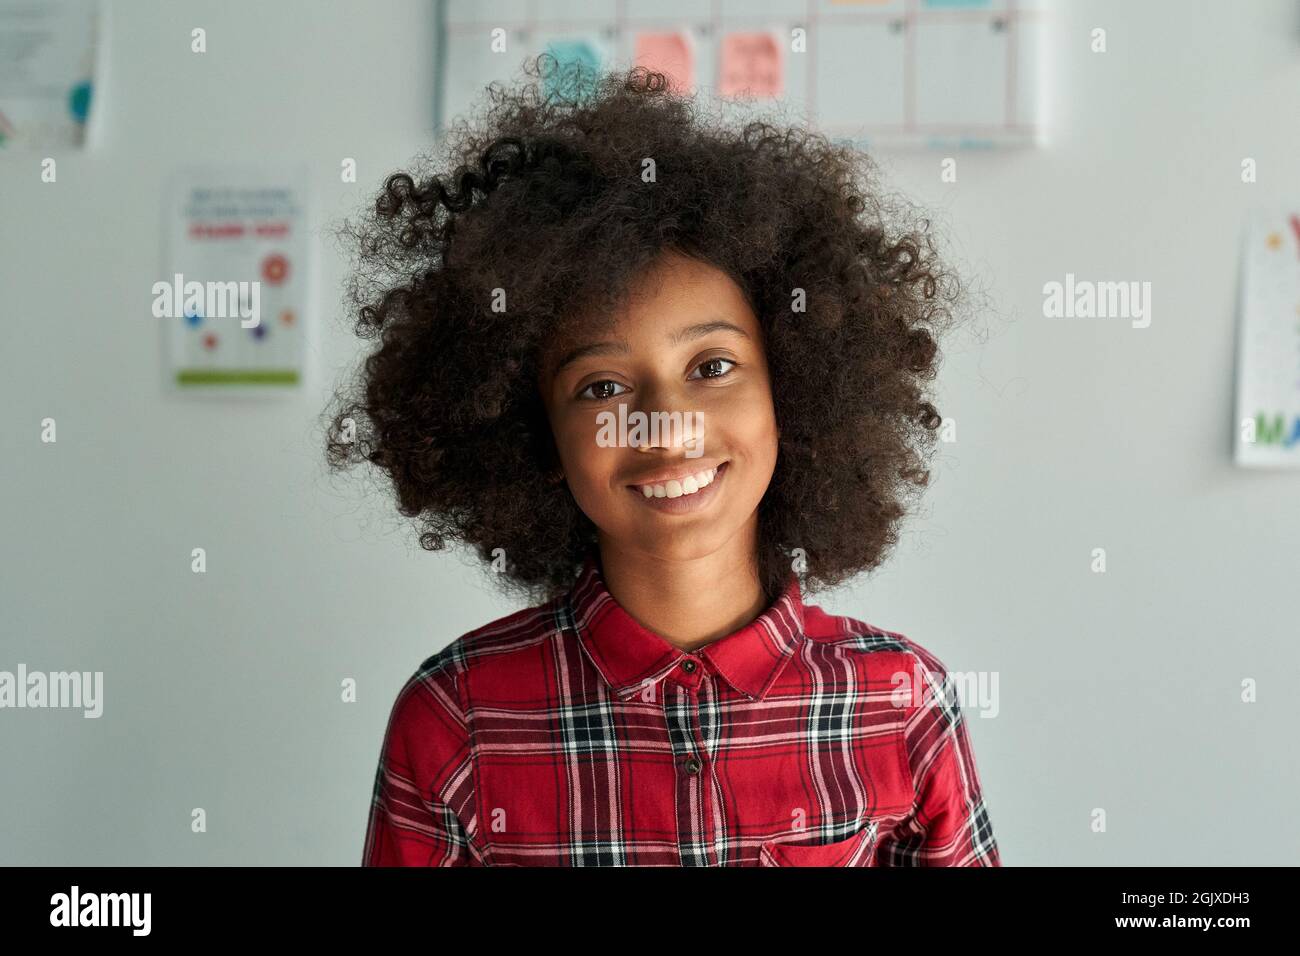 Portrait of cute smiling afro American schoolgirl standing in classroom. Stock Photo